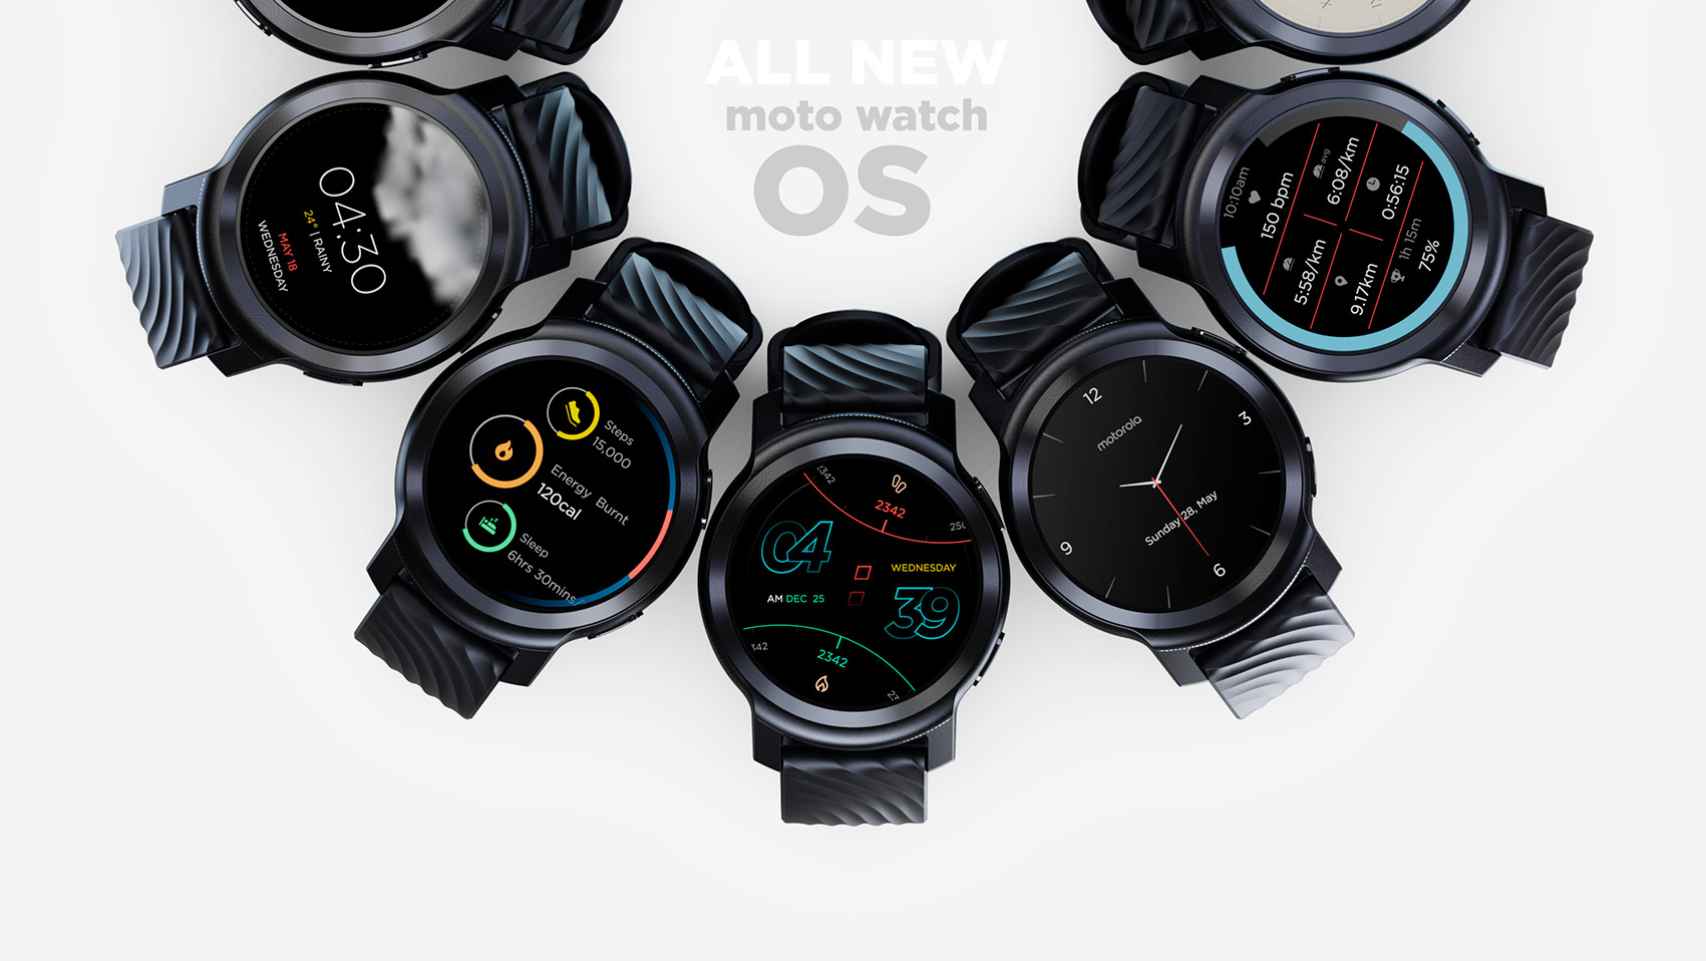 Moto Watch OS